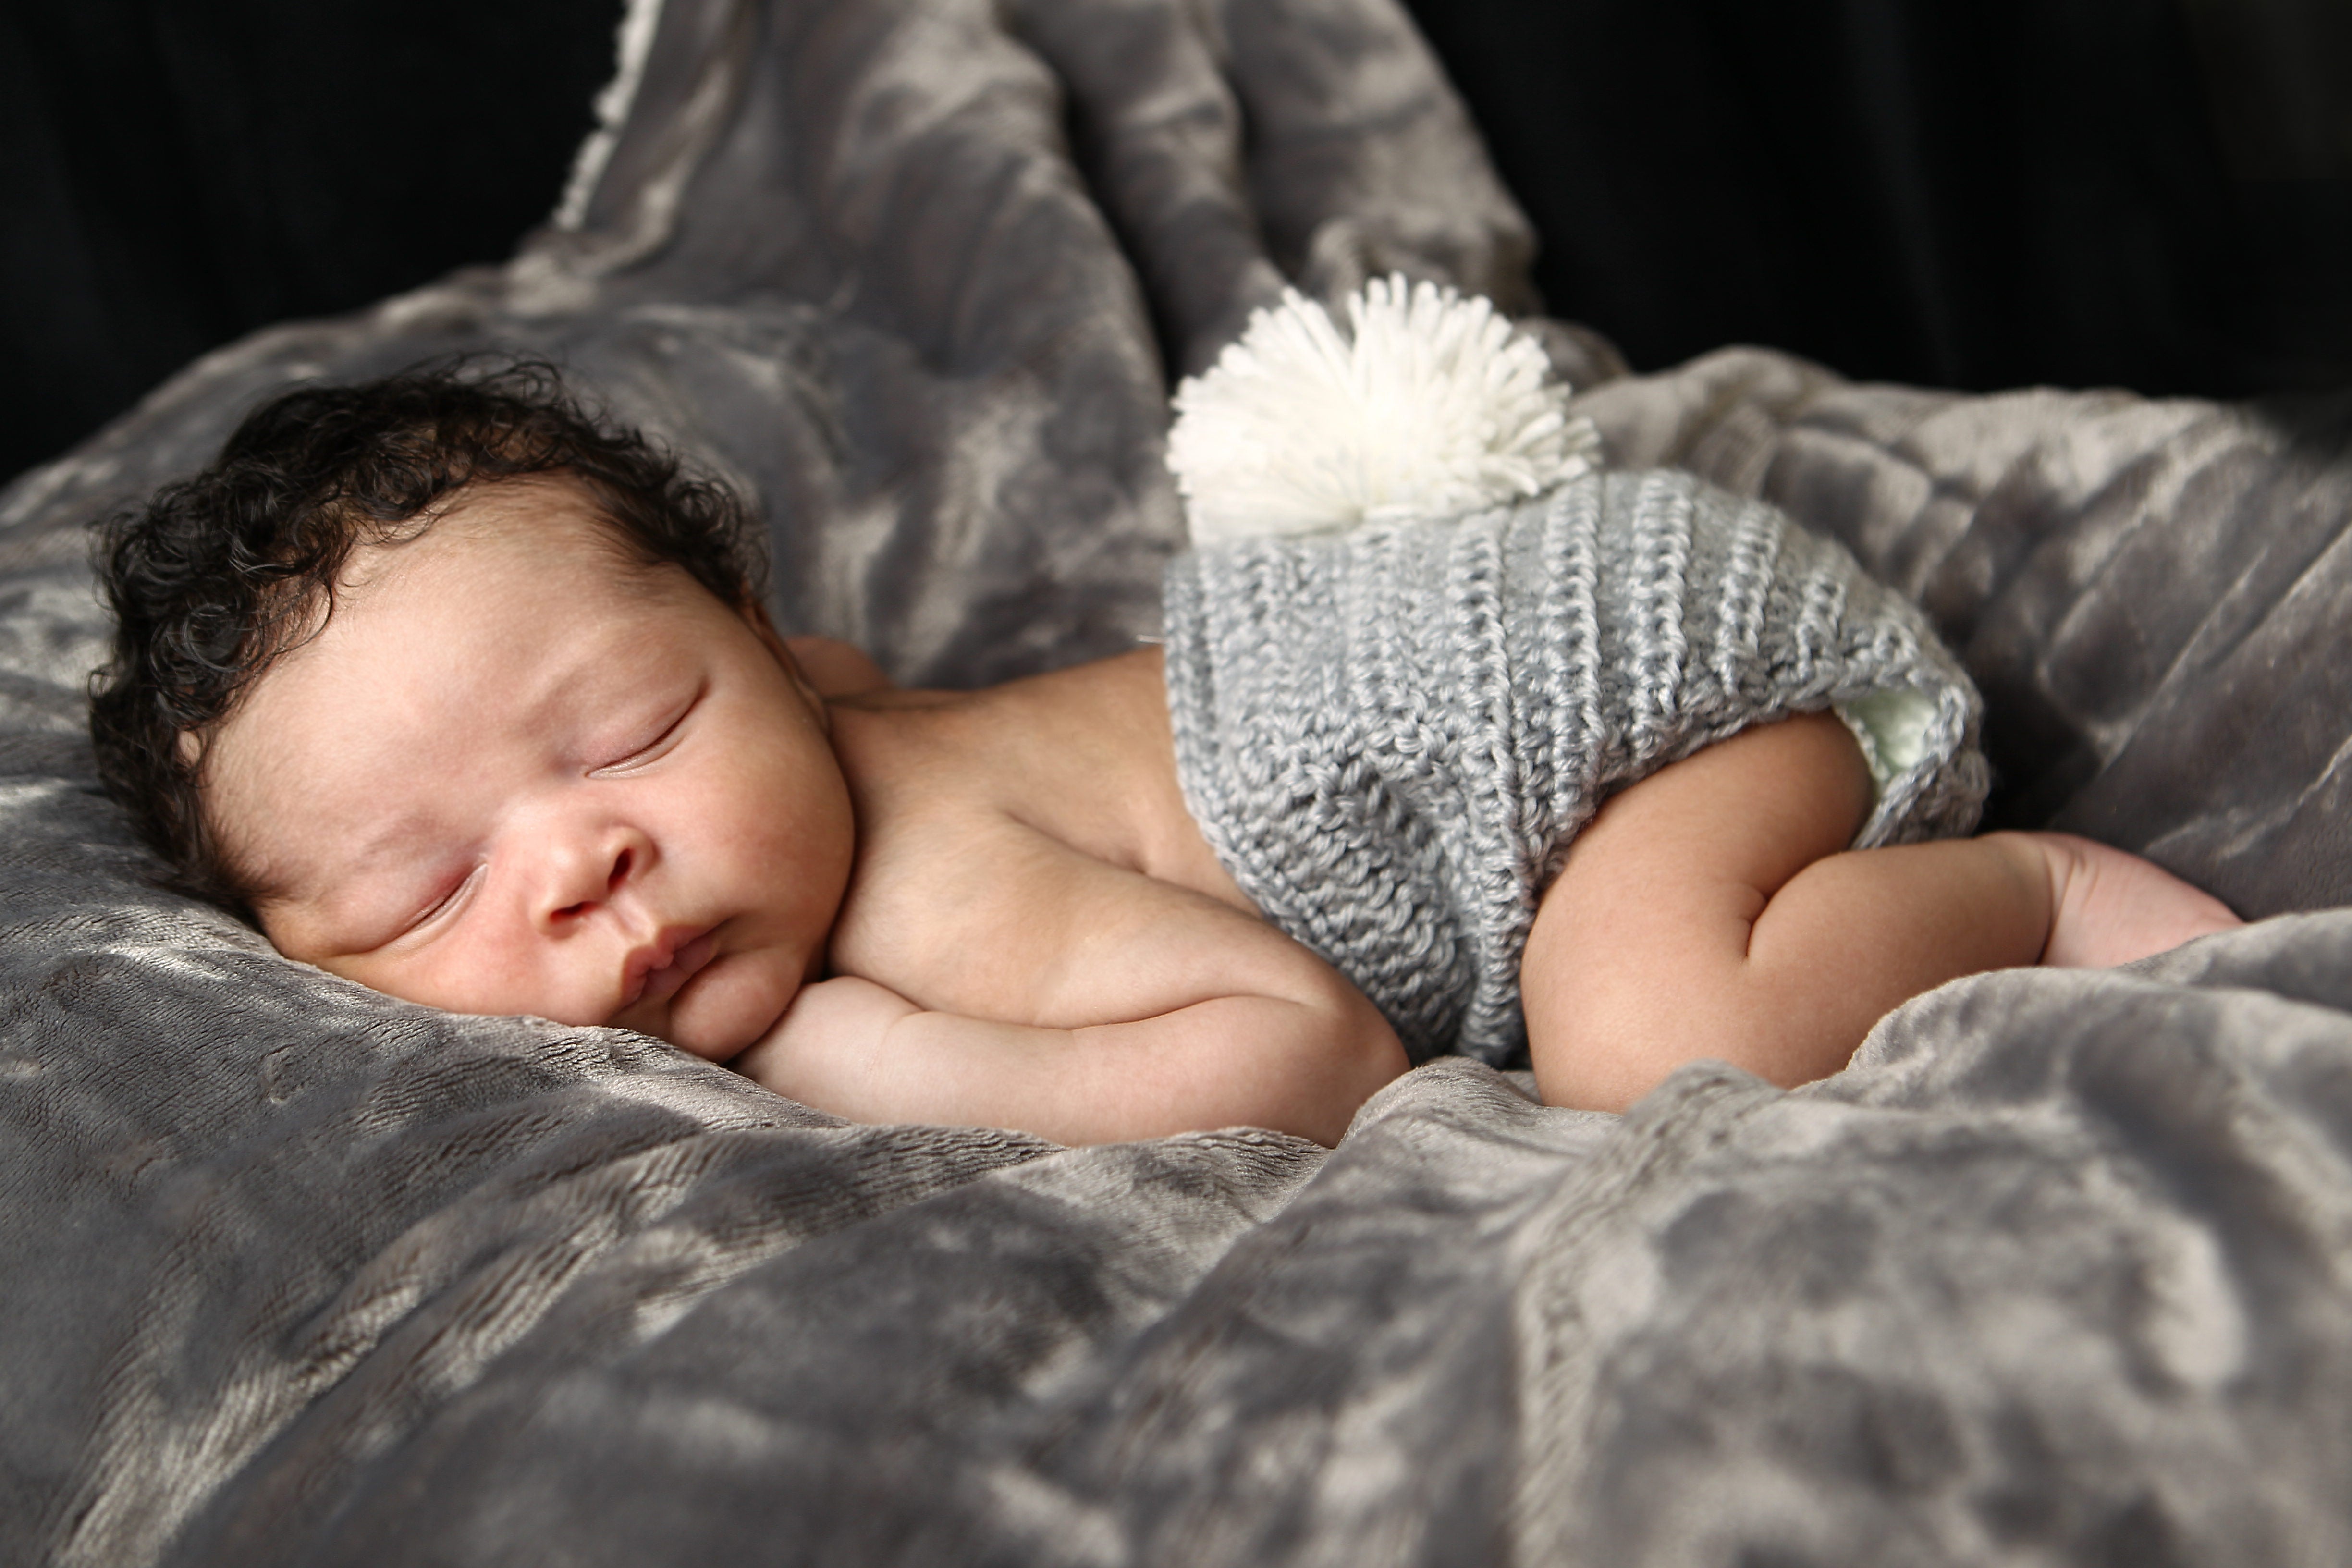 EXCLUSIVE: Kita Williams' Shares First Photos Of Son Greysun